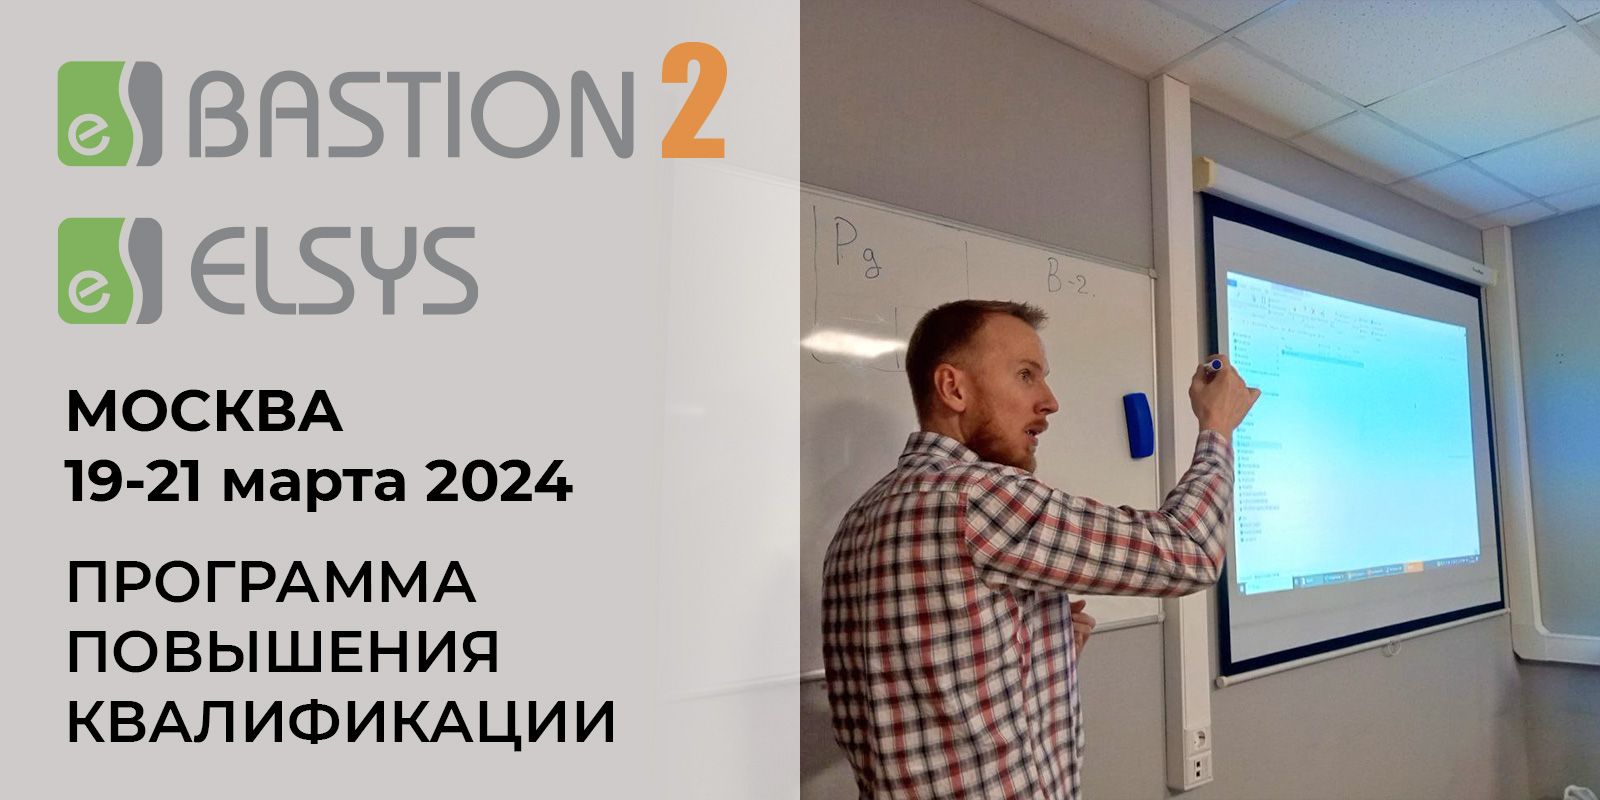 Курс по программе повышения квалификации АПК Бастион 2 и СКУД Elsys 19-22 марта 2024, г. Москва